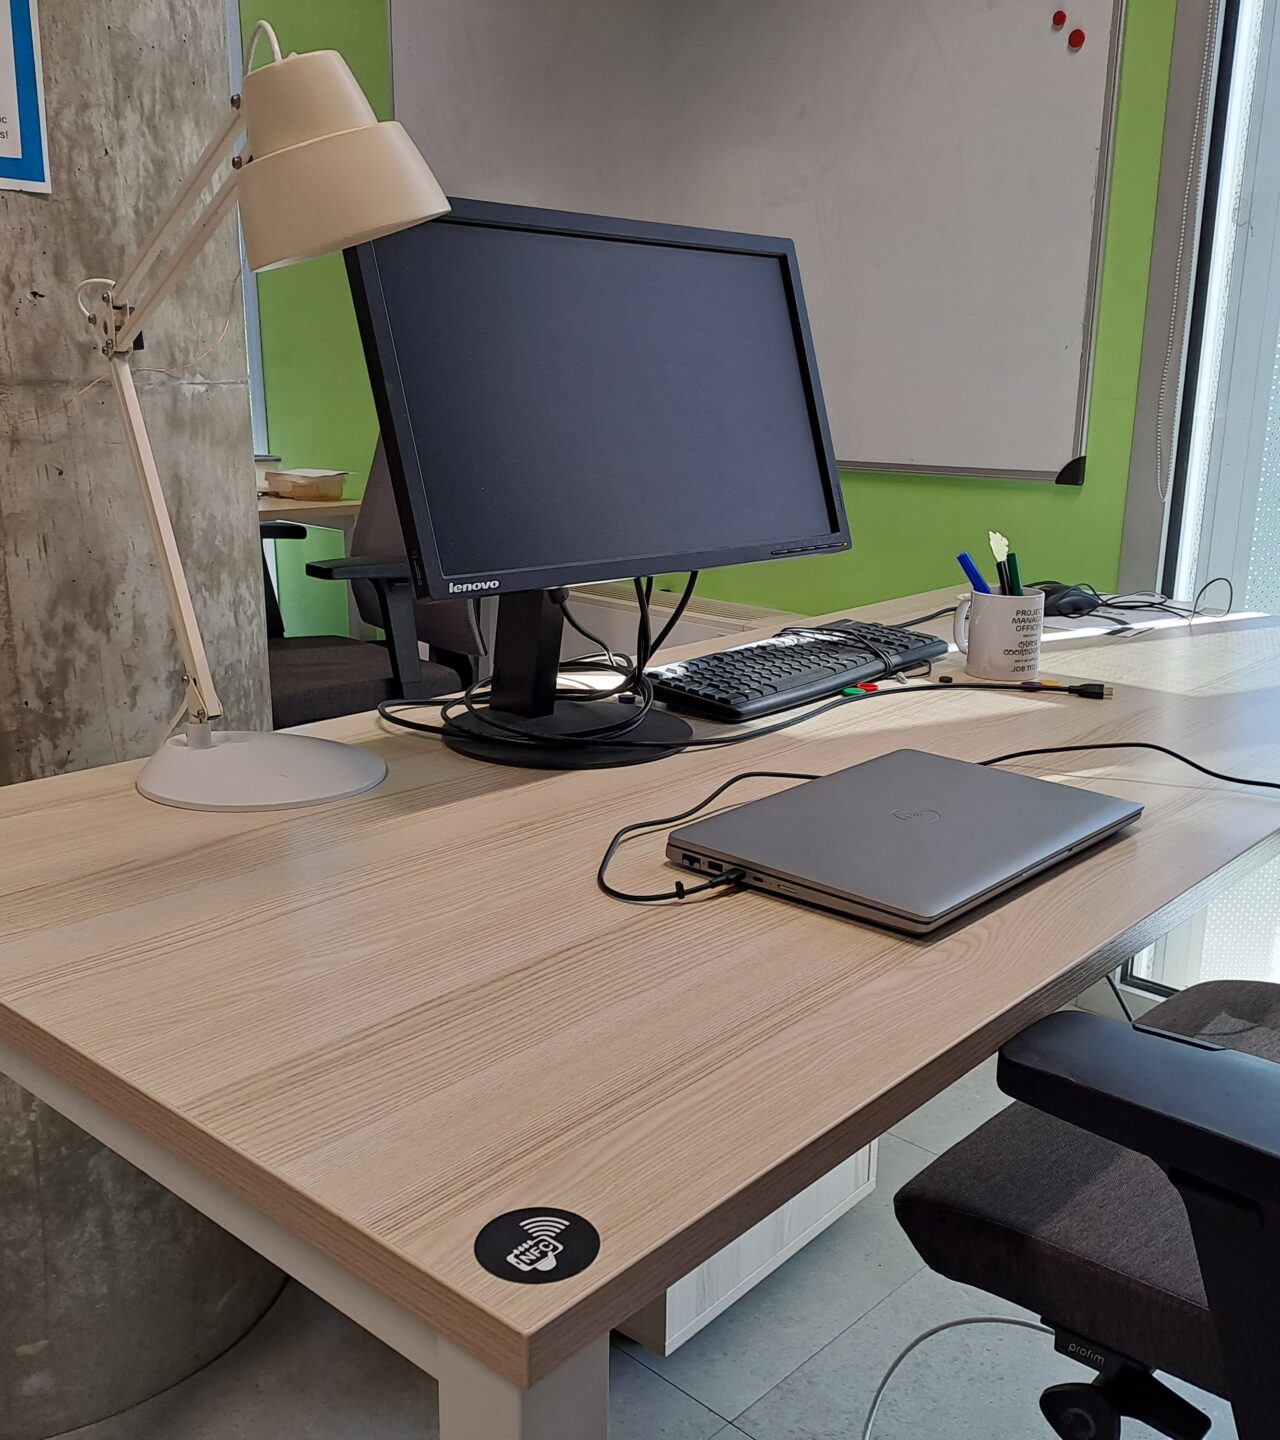 GoBright - Case Story - KRUK Italia - Desk Booking - Smart Workplace Solutions - Desk management